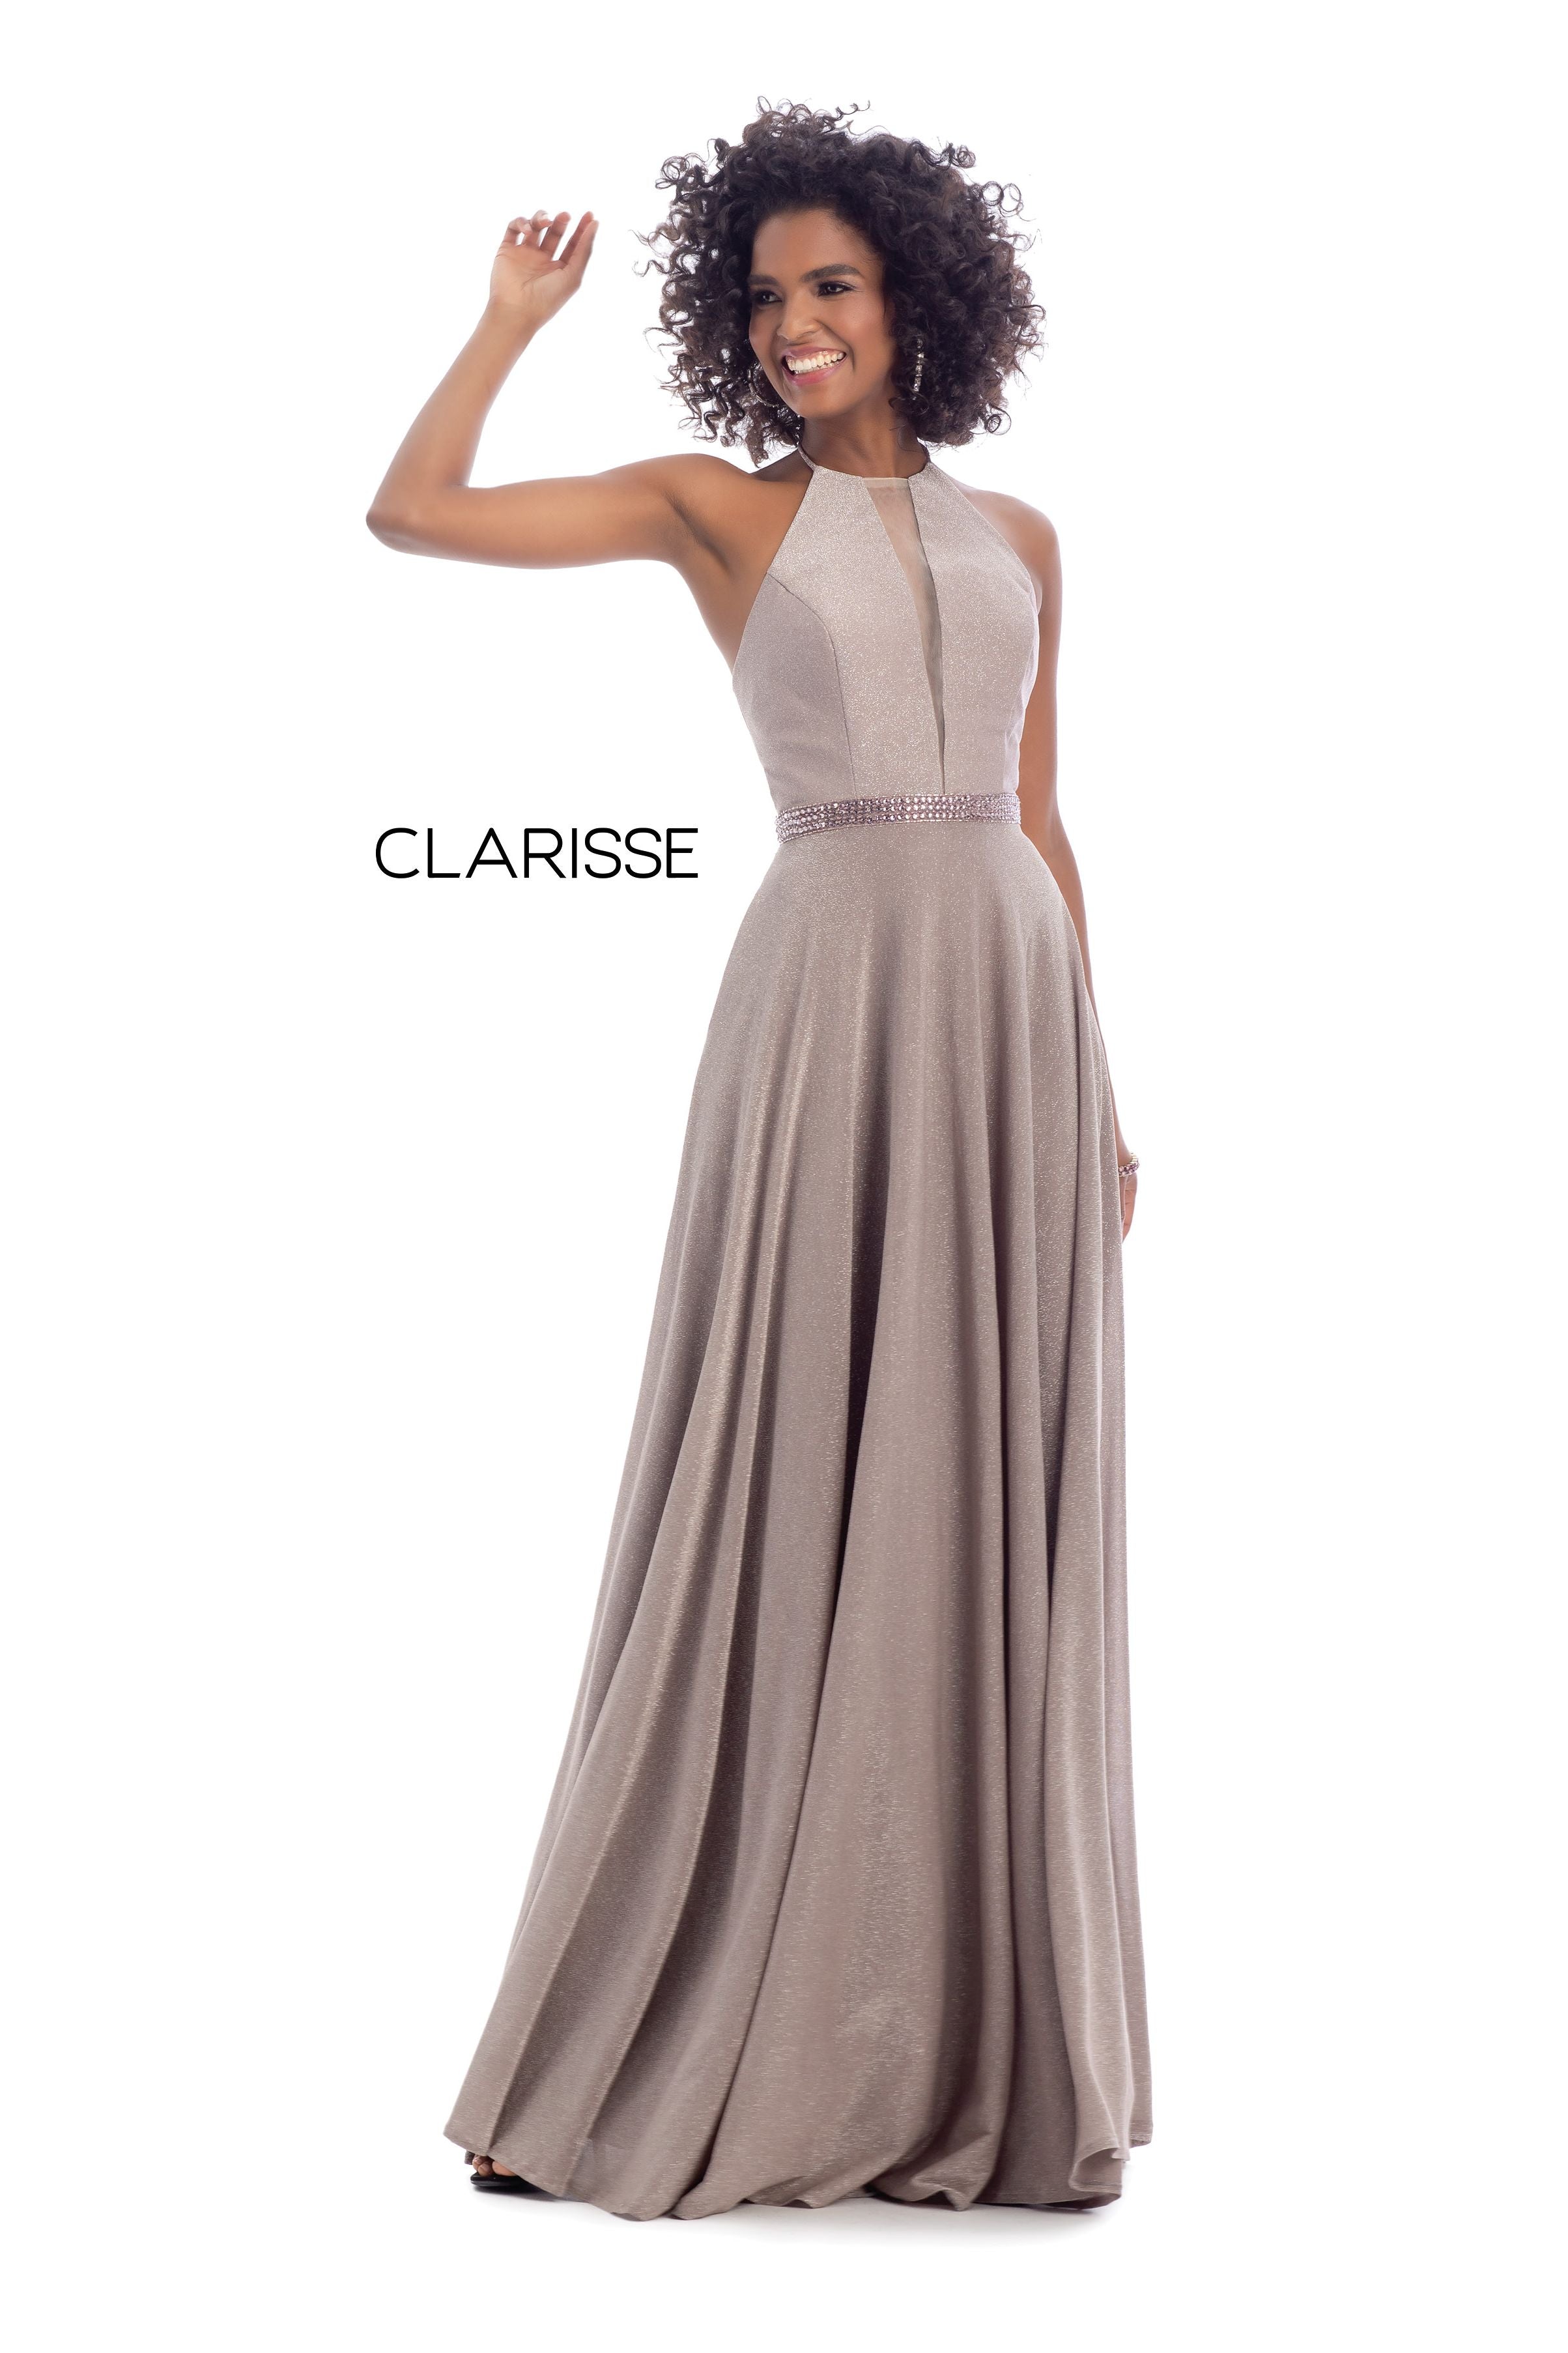 Clarisse -8051 Halter Neck A-Line Prom Dress